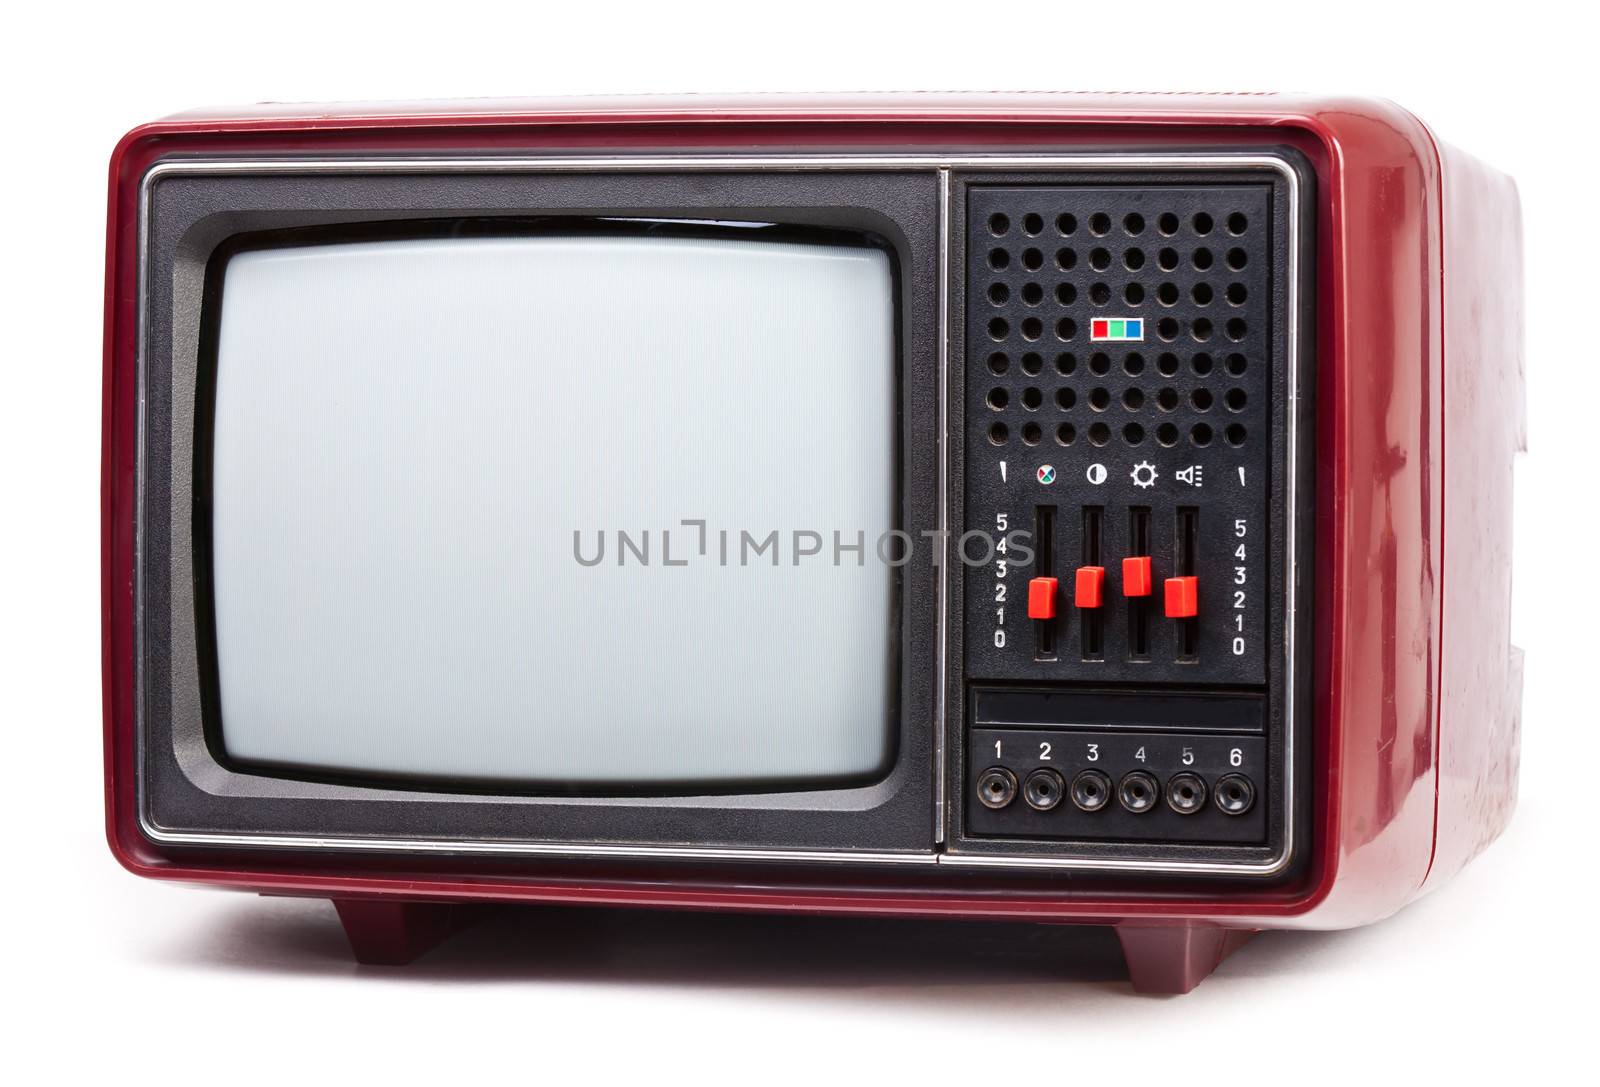 Vintage red Television set on white background